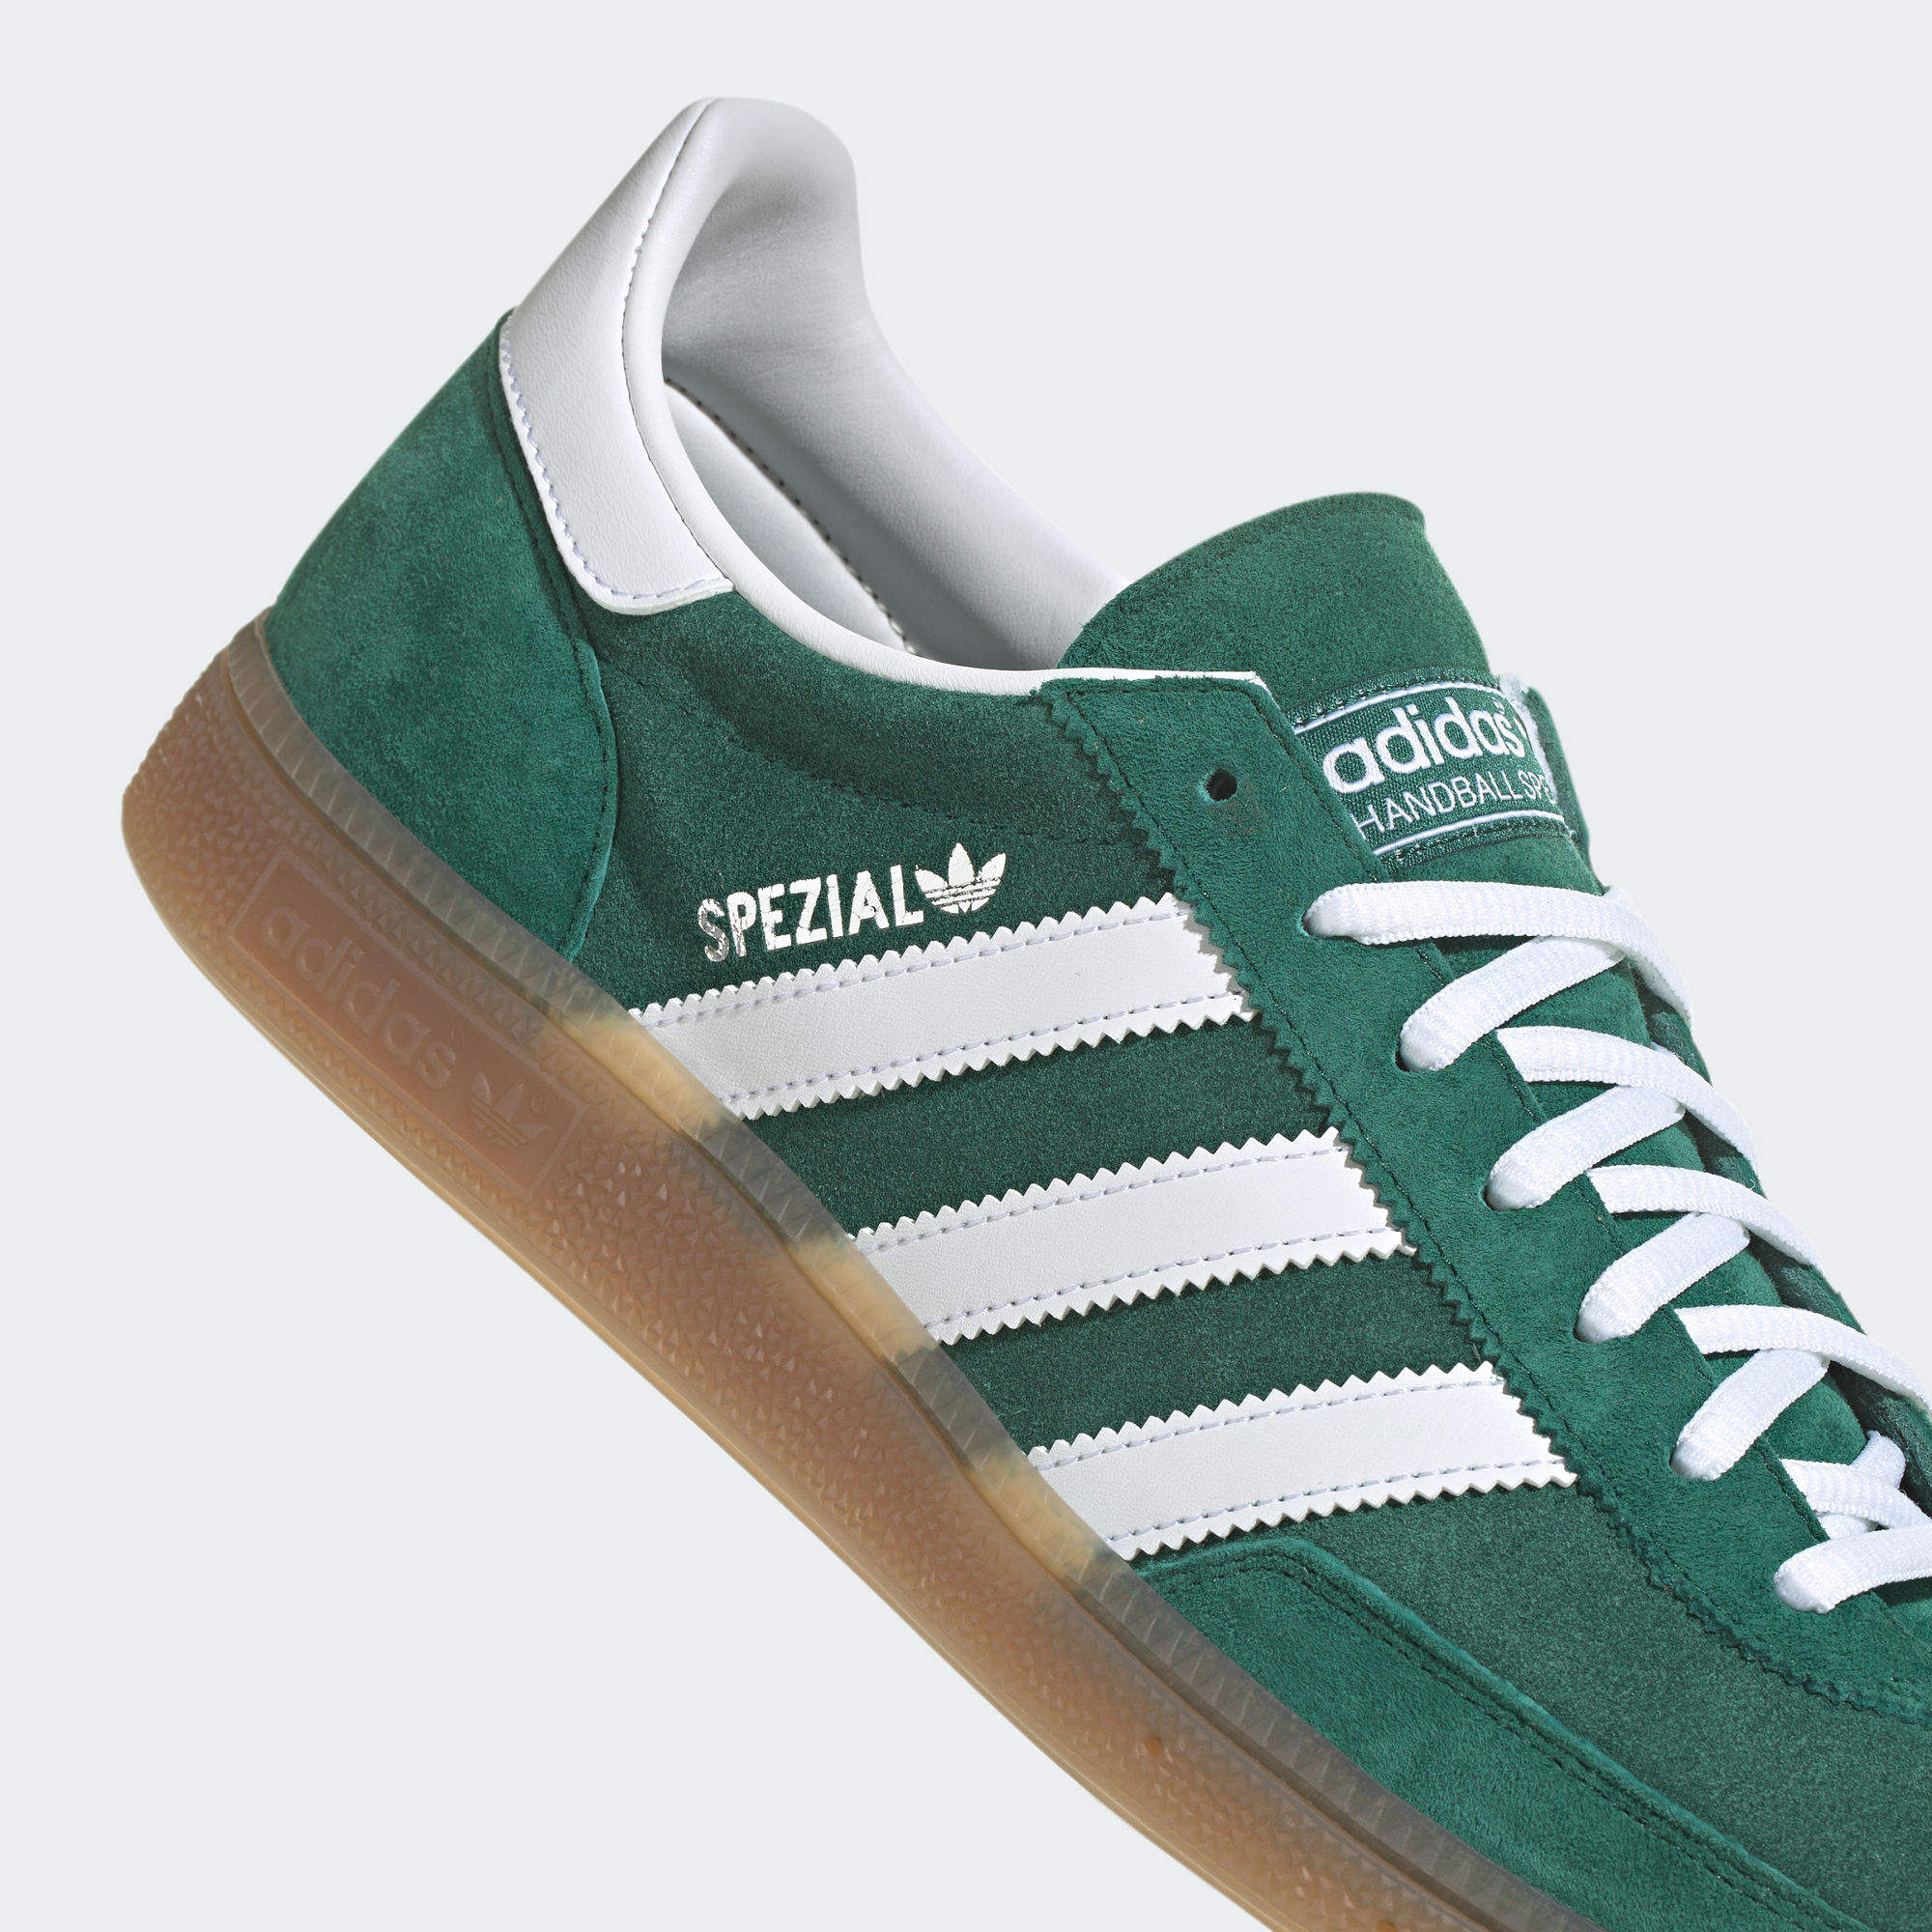 HANDBALL SPEZIAL 運動鞋- 綠色| 女子,男子| adidas(愛迪達)香港官方網 